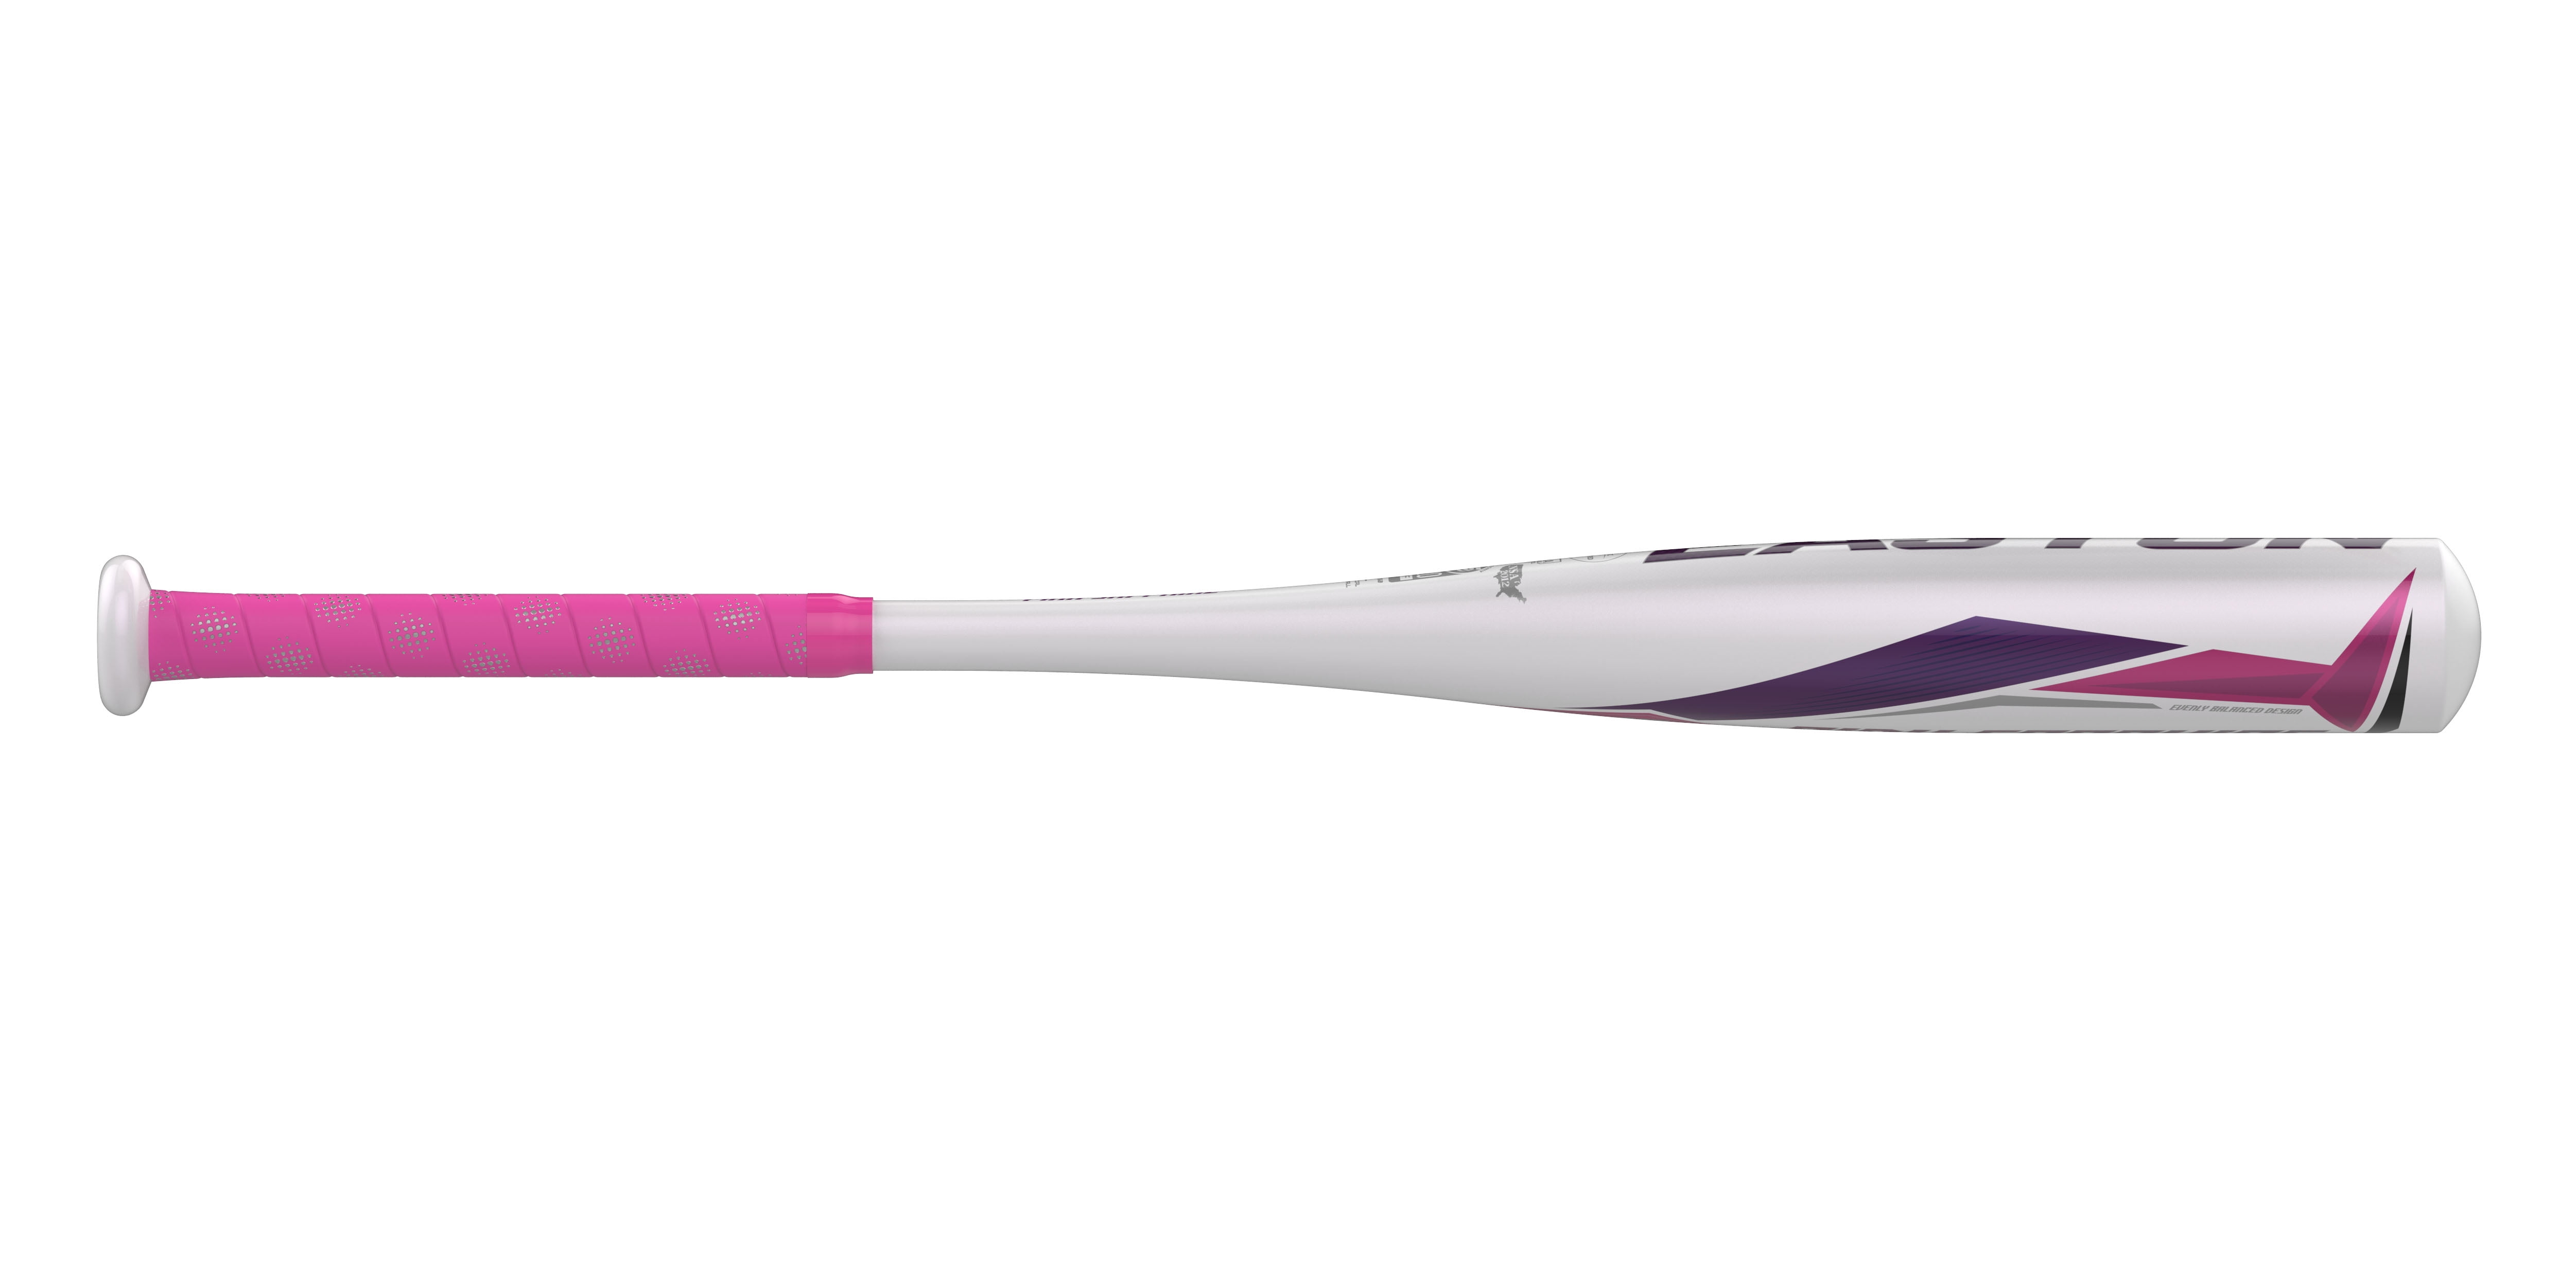 Pink MLB Bats for sale